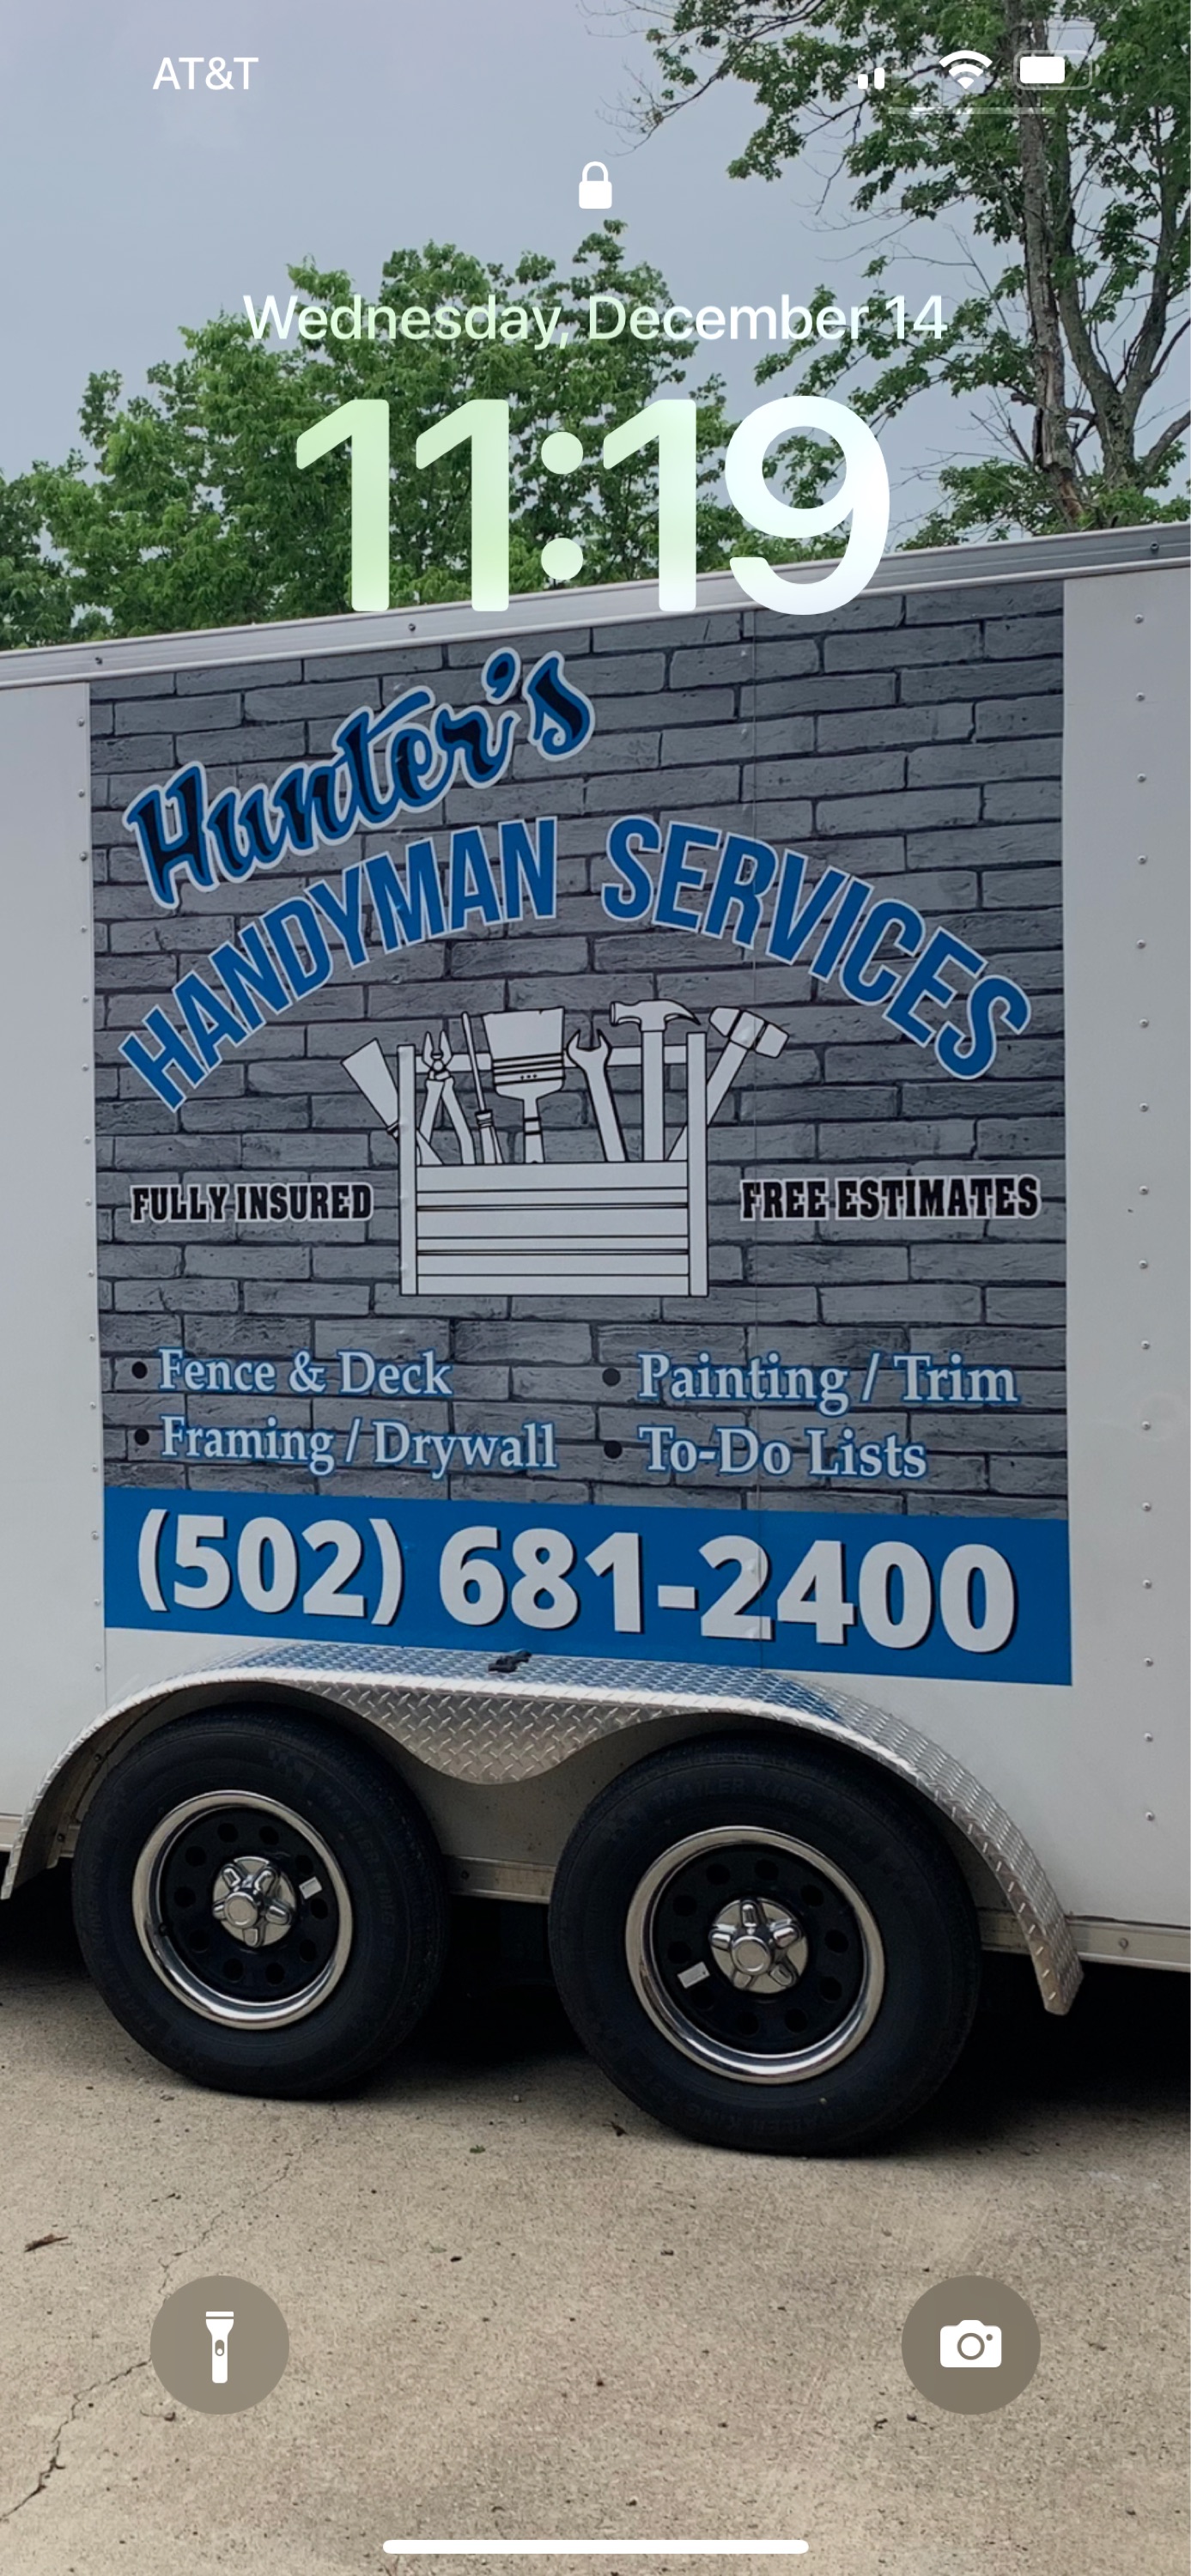 Hunters Handyman Services Logo